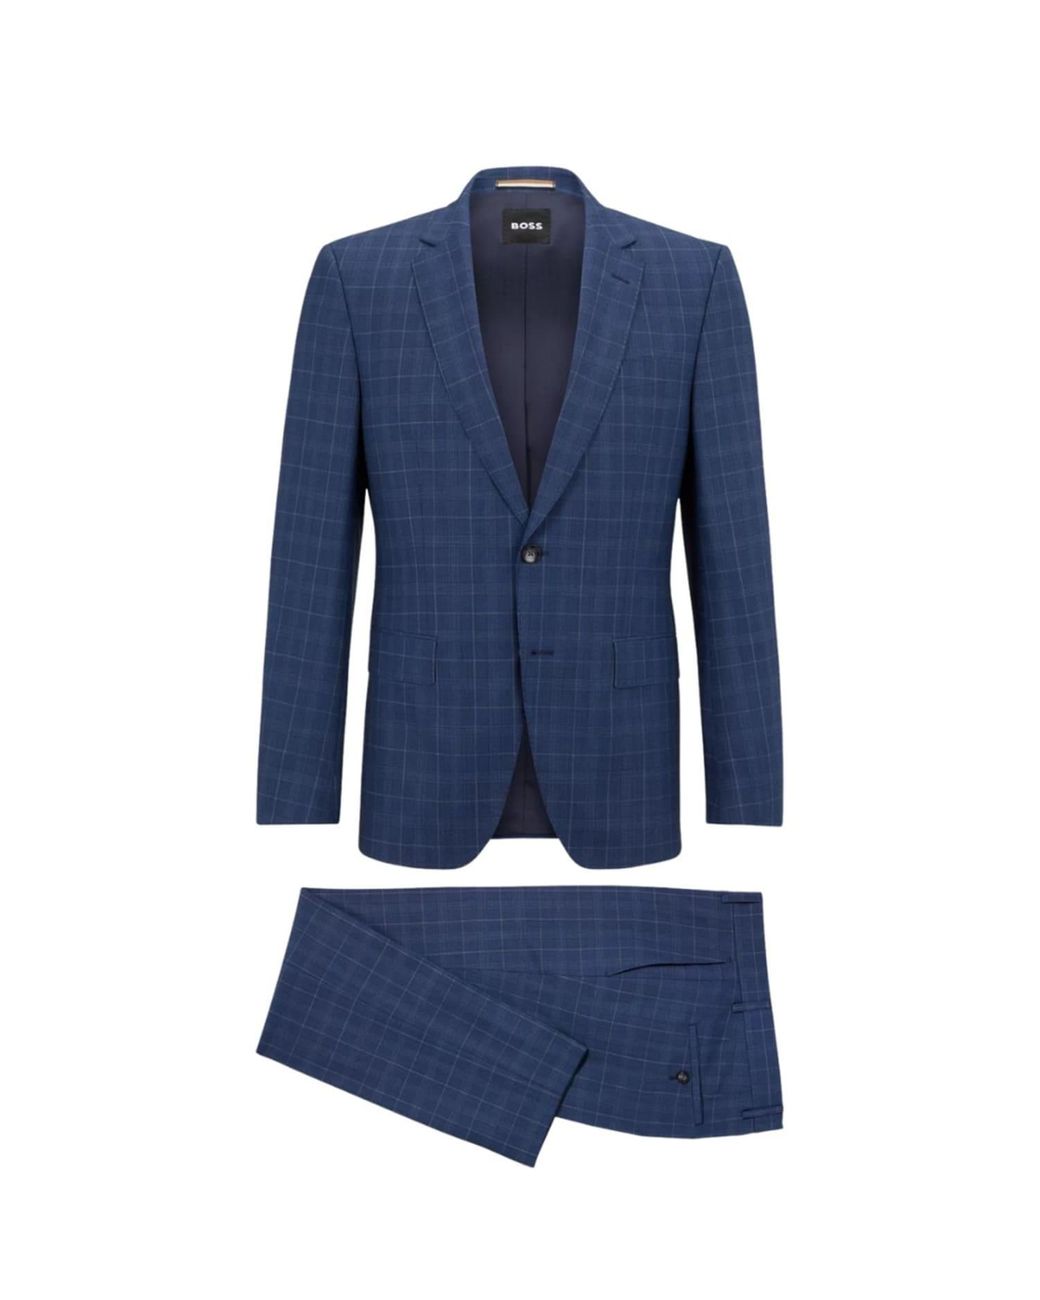 BOSS by HUGO BOSS H-huge-2pcs-224 Suit in Blue for Men | Lyst